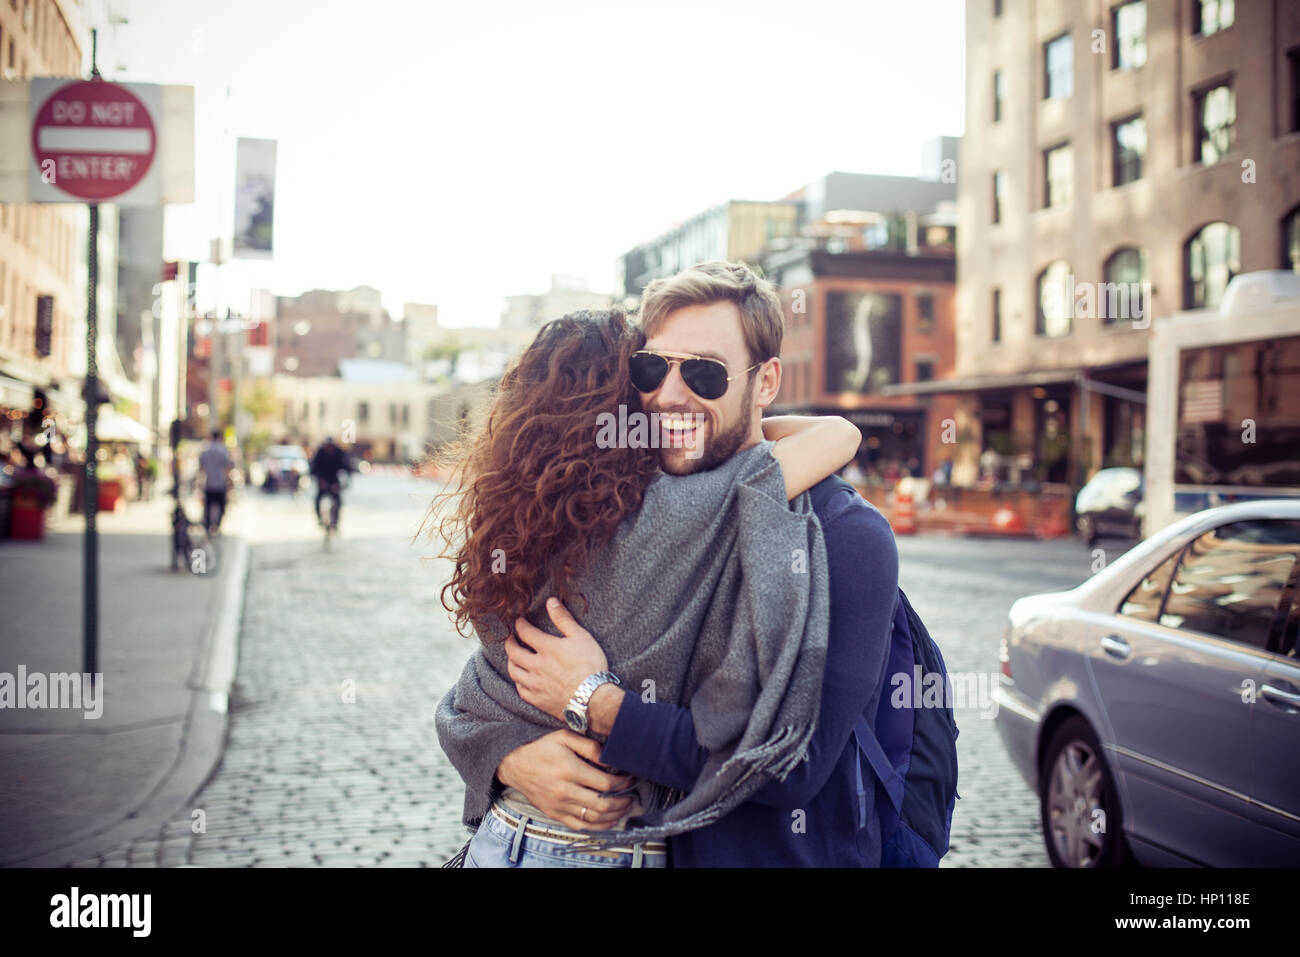 Couple embracing on city street Stock Photo